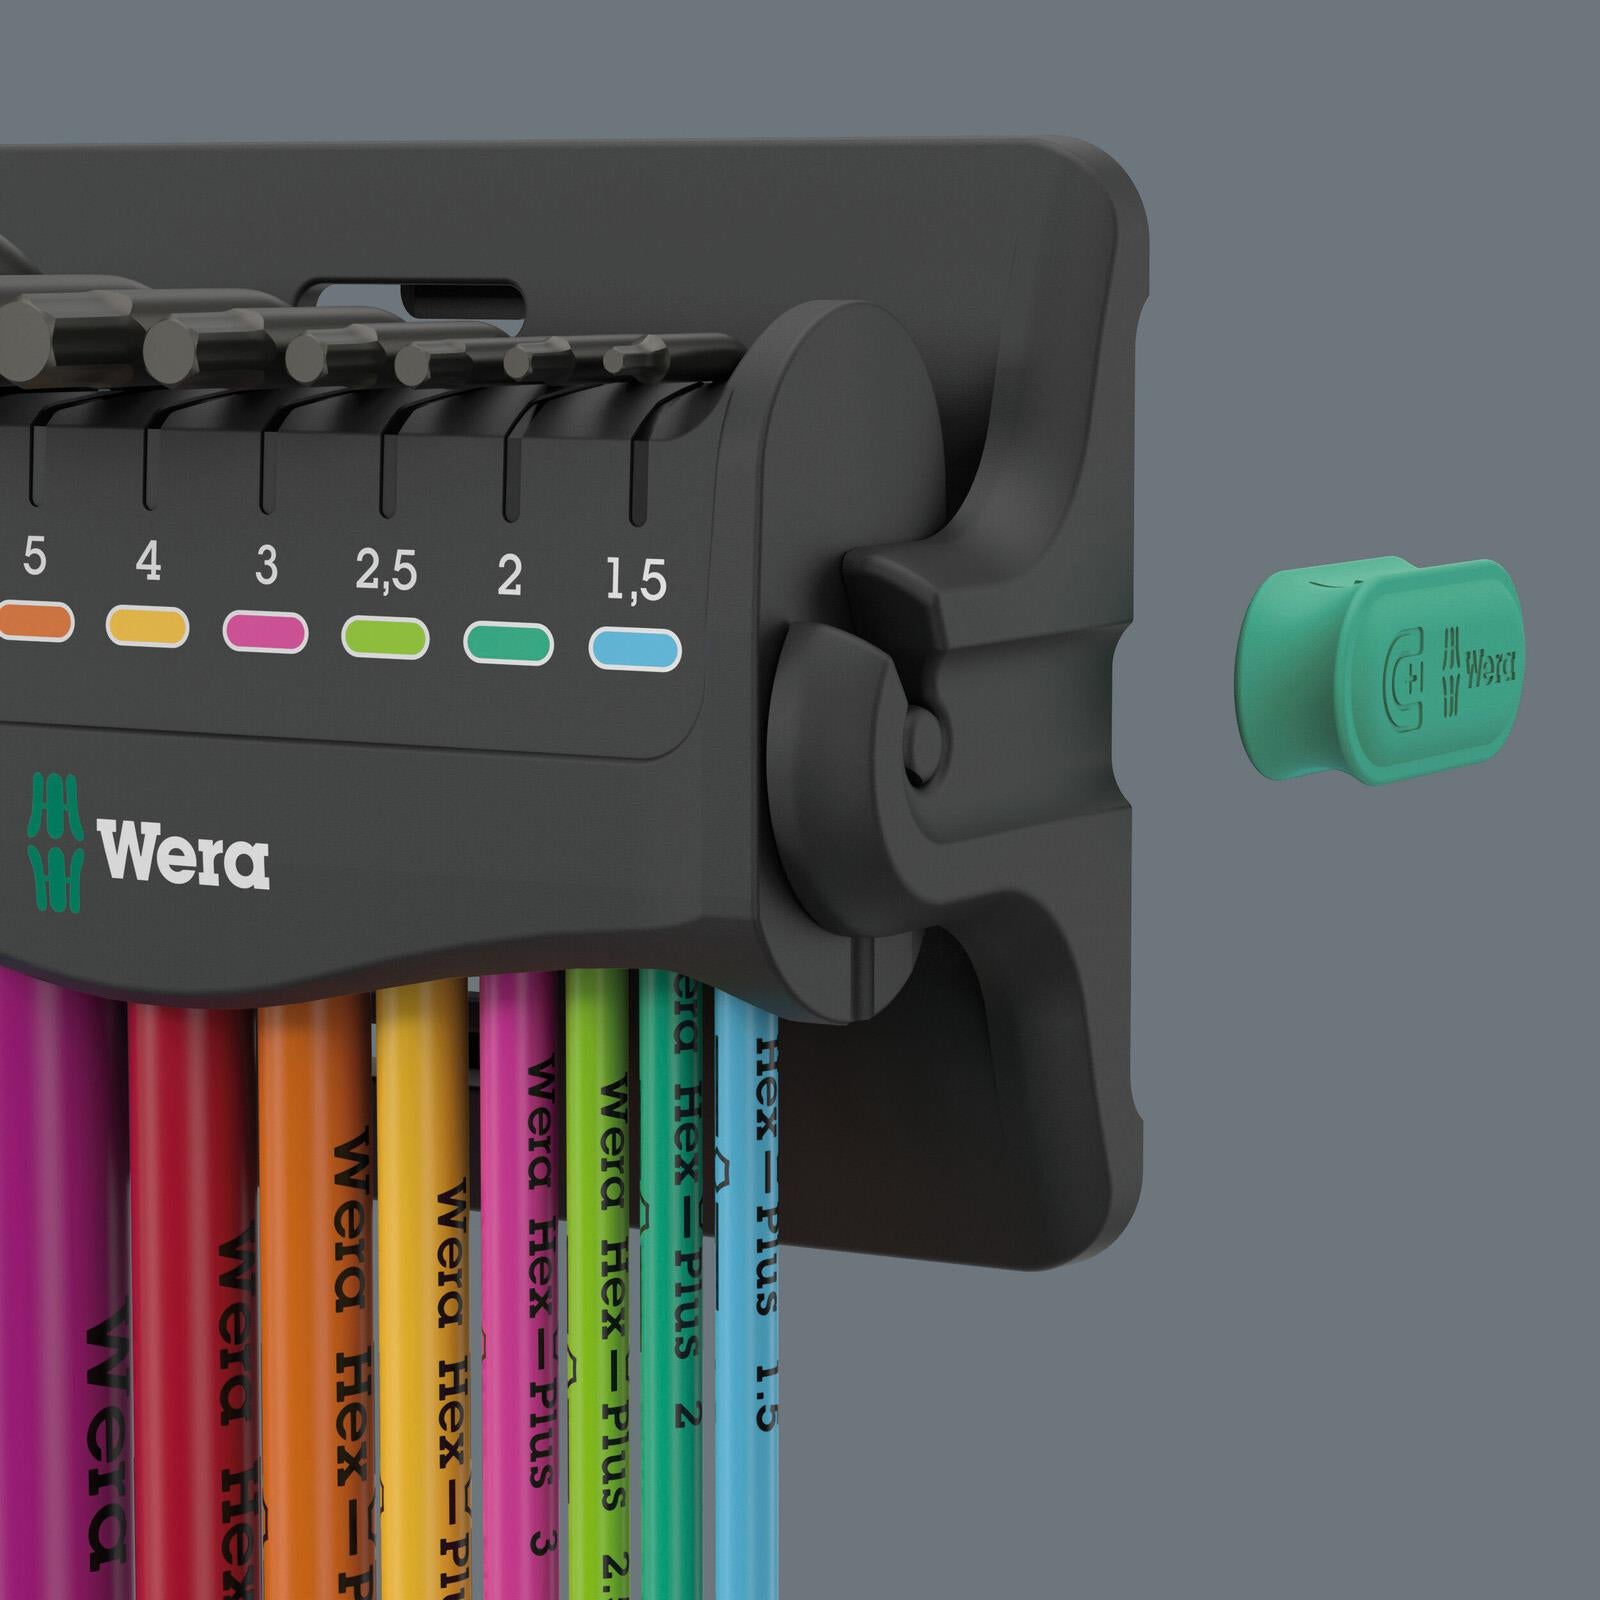 Wera Hex Key Set Stand Wall Rack 950/9 Hex Plus Multicolour 3 L-Key Set Metric BlackLaser 9 Pieces 1.5-10mm